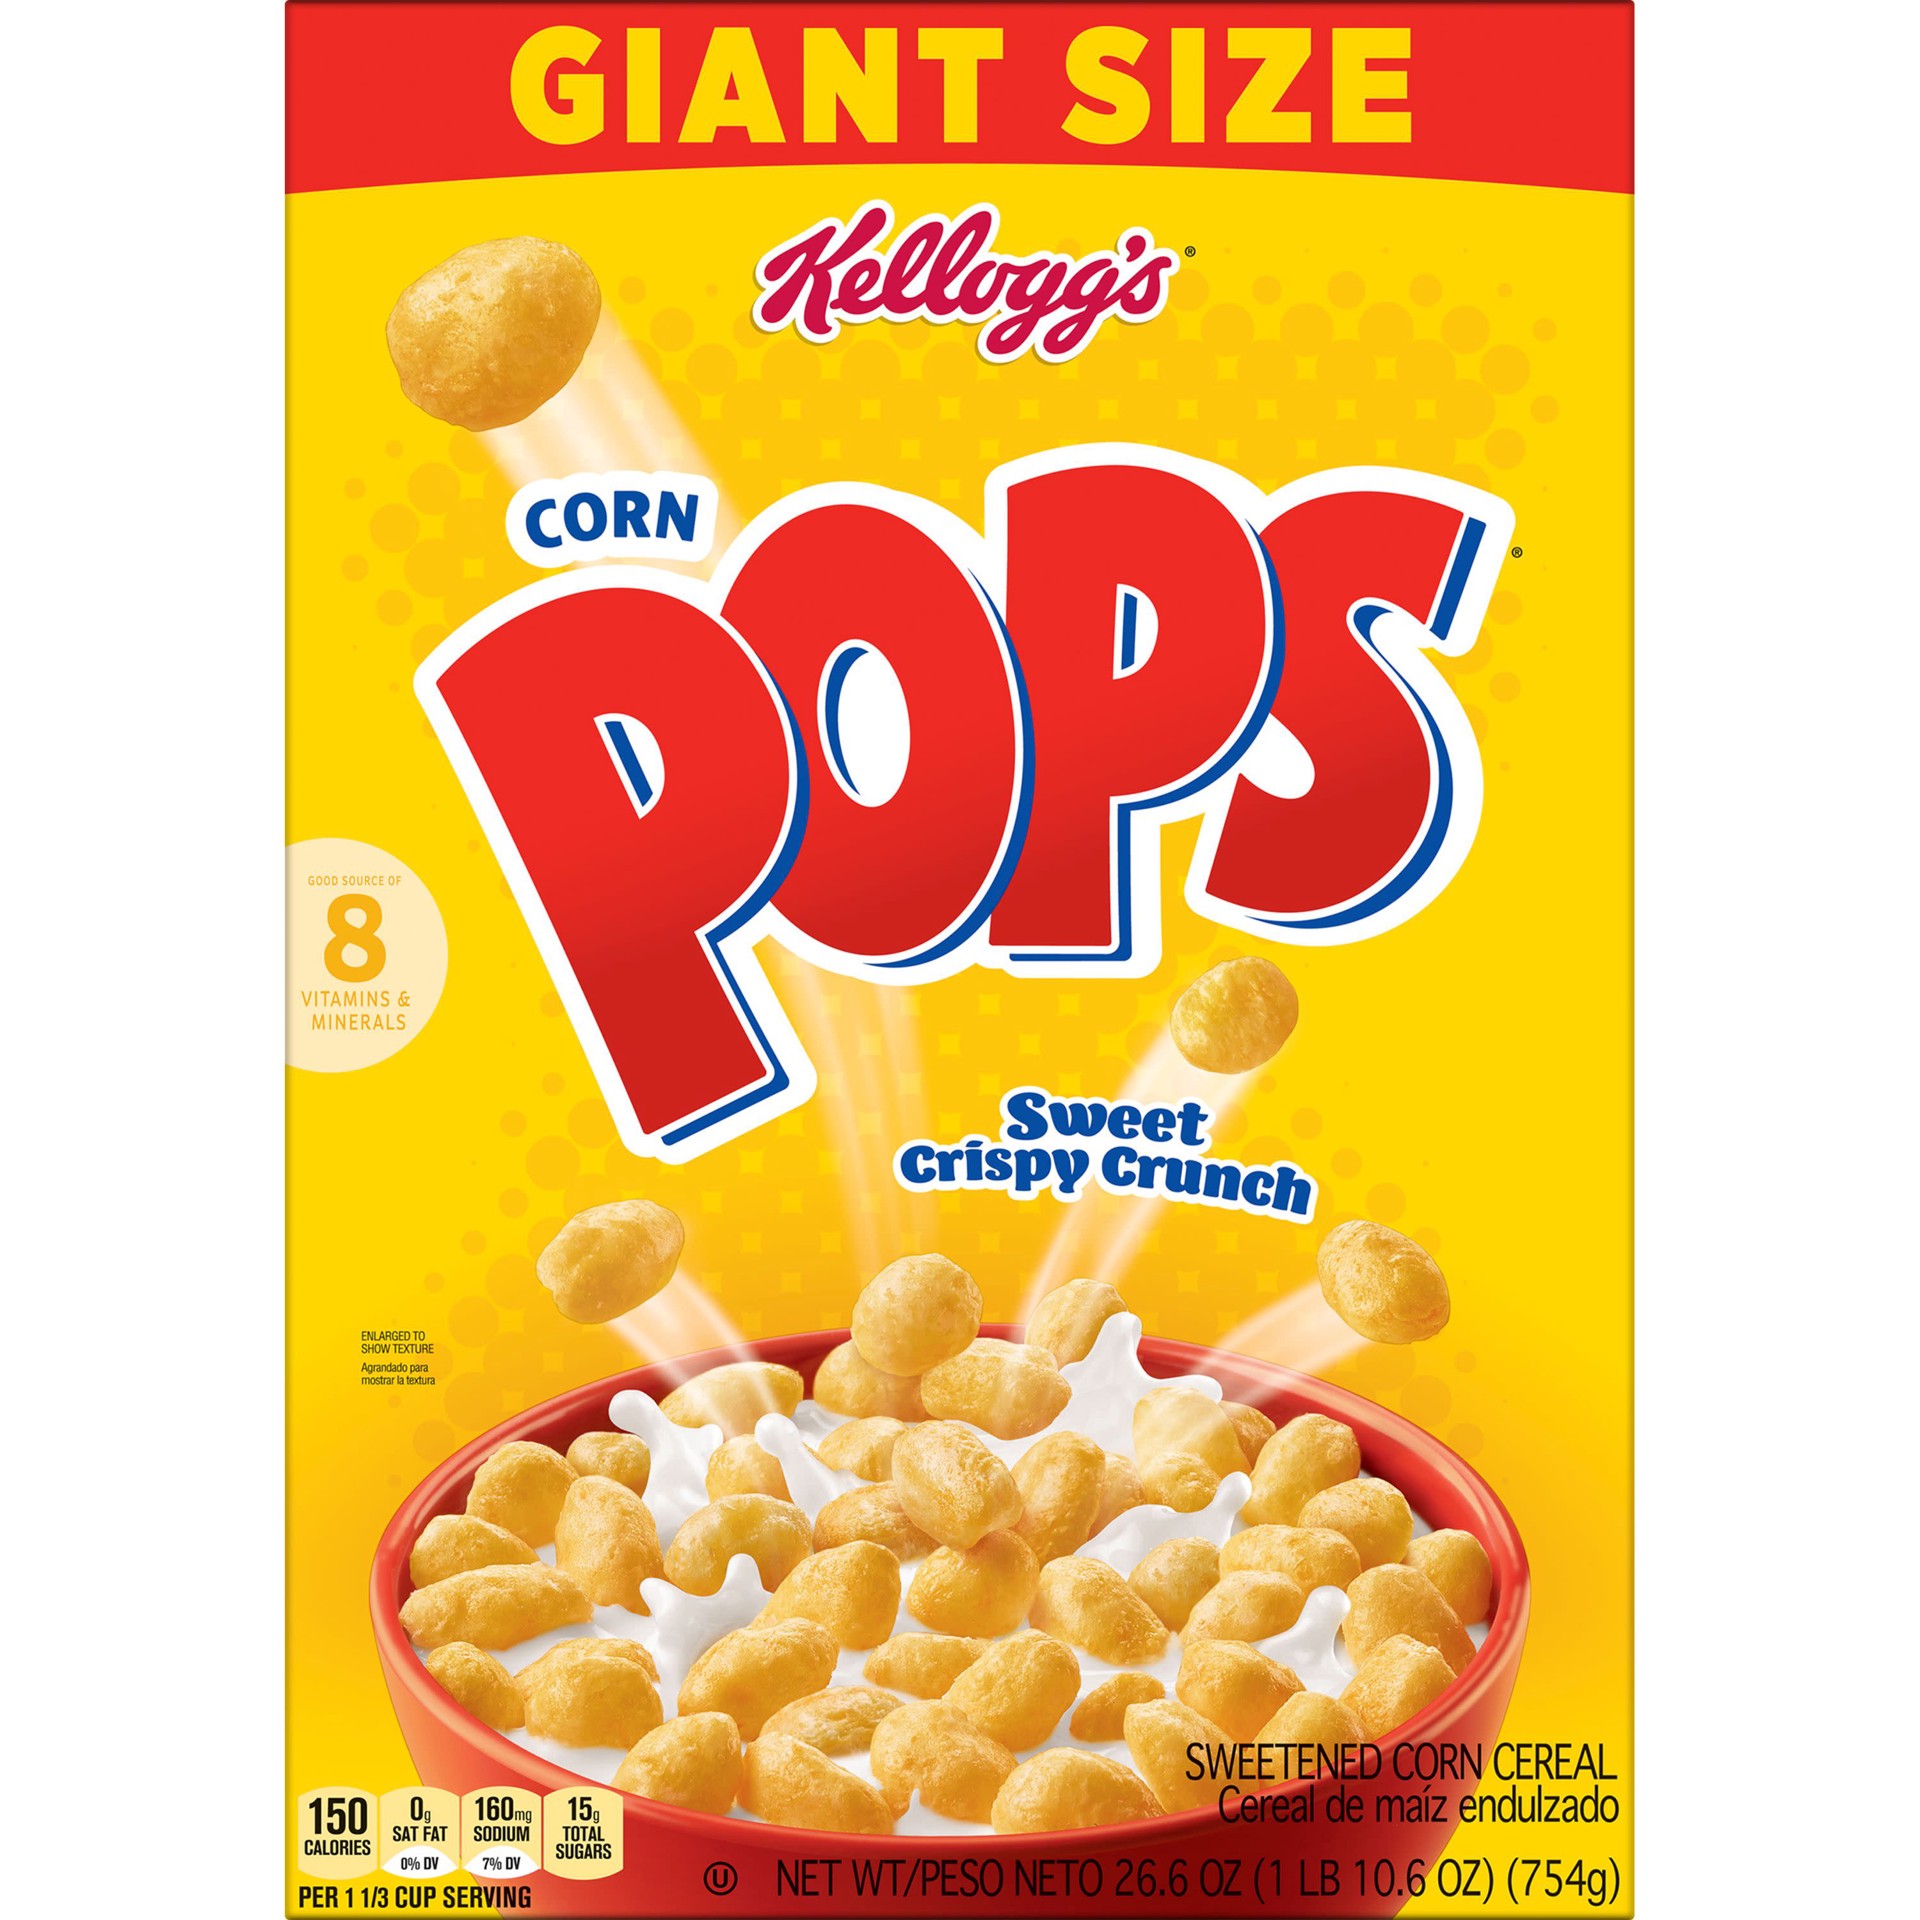 slide 5 of 5, Corn Pops Kellogg's Corn Pops Breakfast Cereal, 8 Vitamins and Minerals, Kids Snacks, Giant Size, Original, 26.6oz Box, 1 Box, 26.6 oz